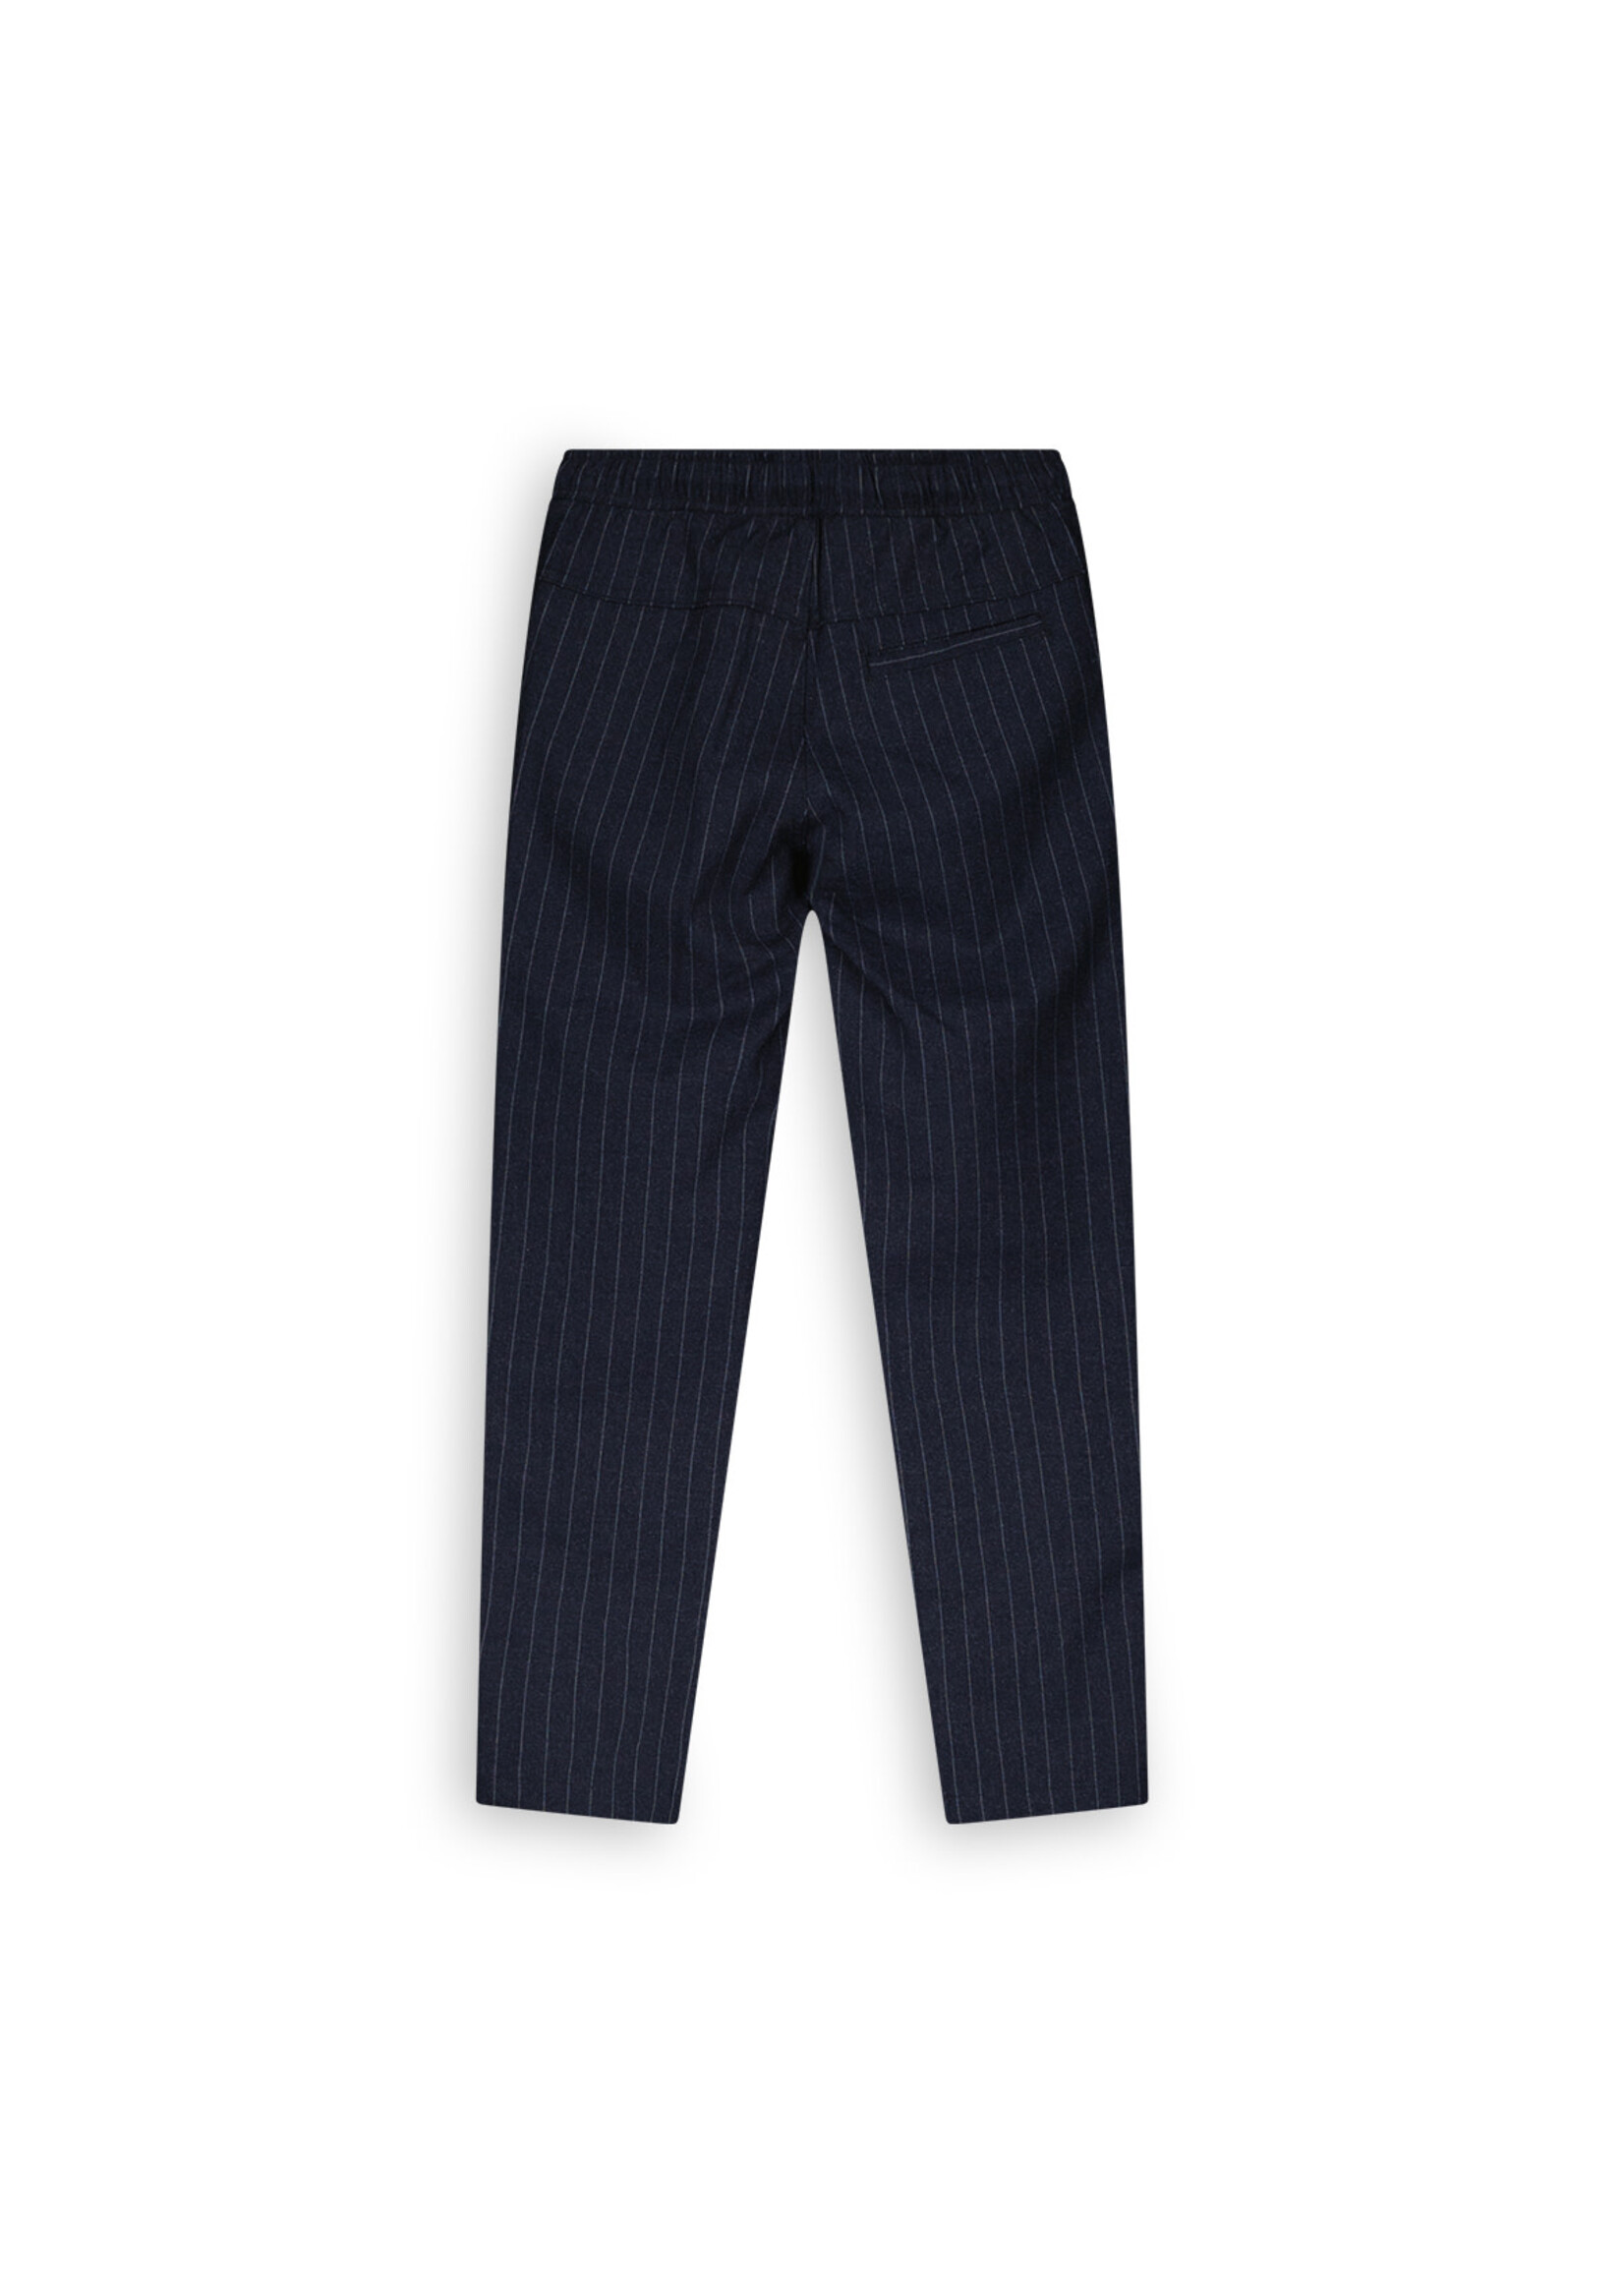 Bellaire Bellaire Woven pinstripe trouser B308-4604 Navy Blazer